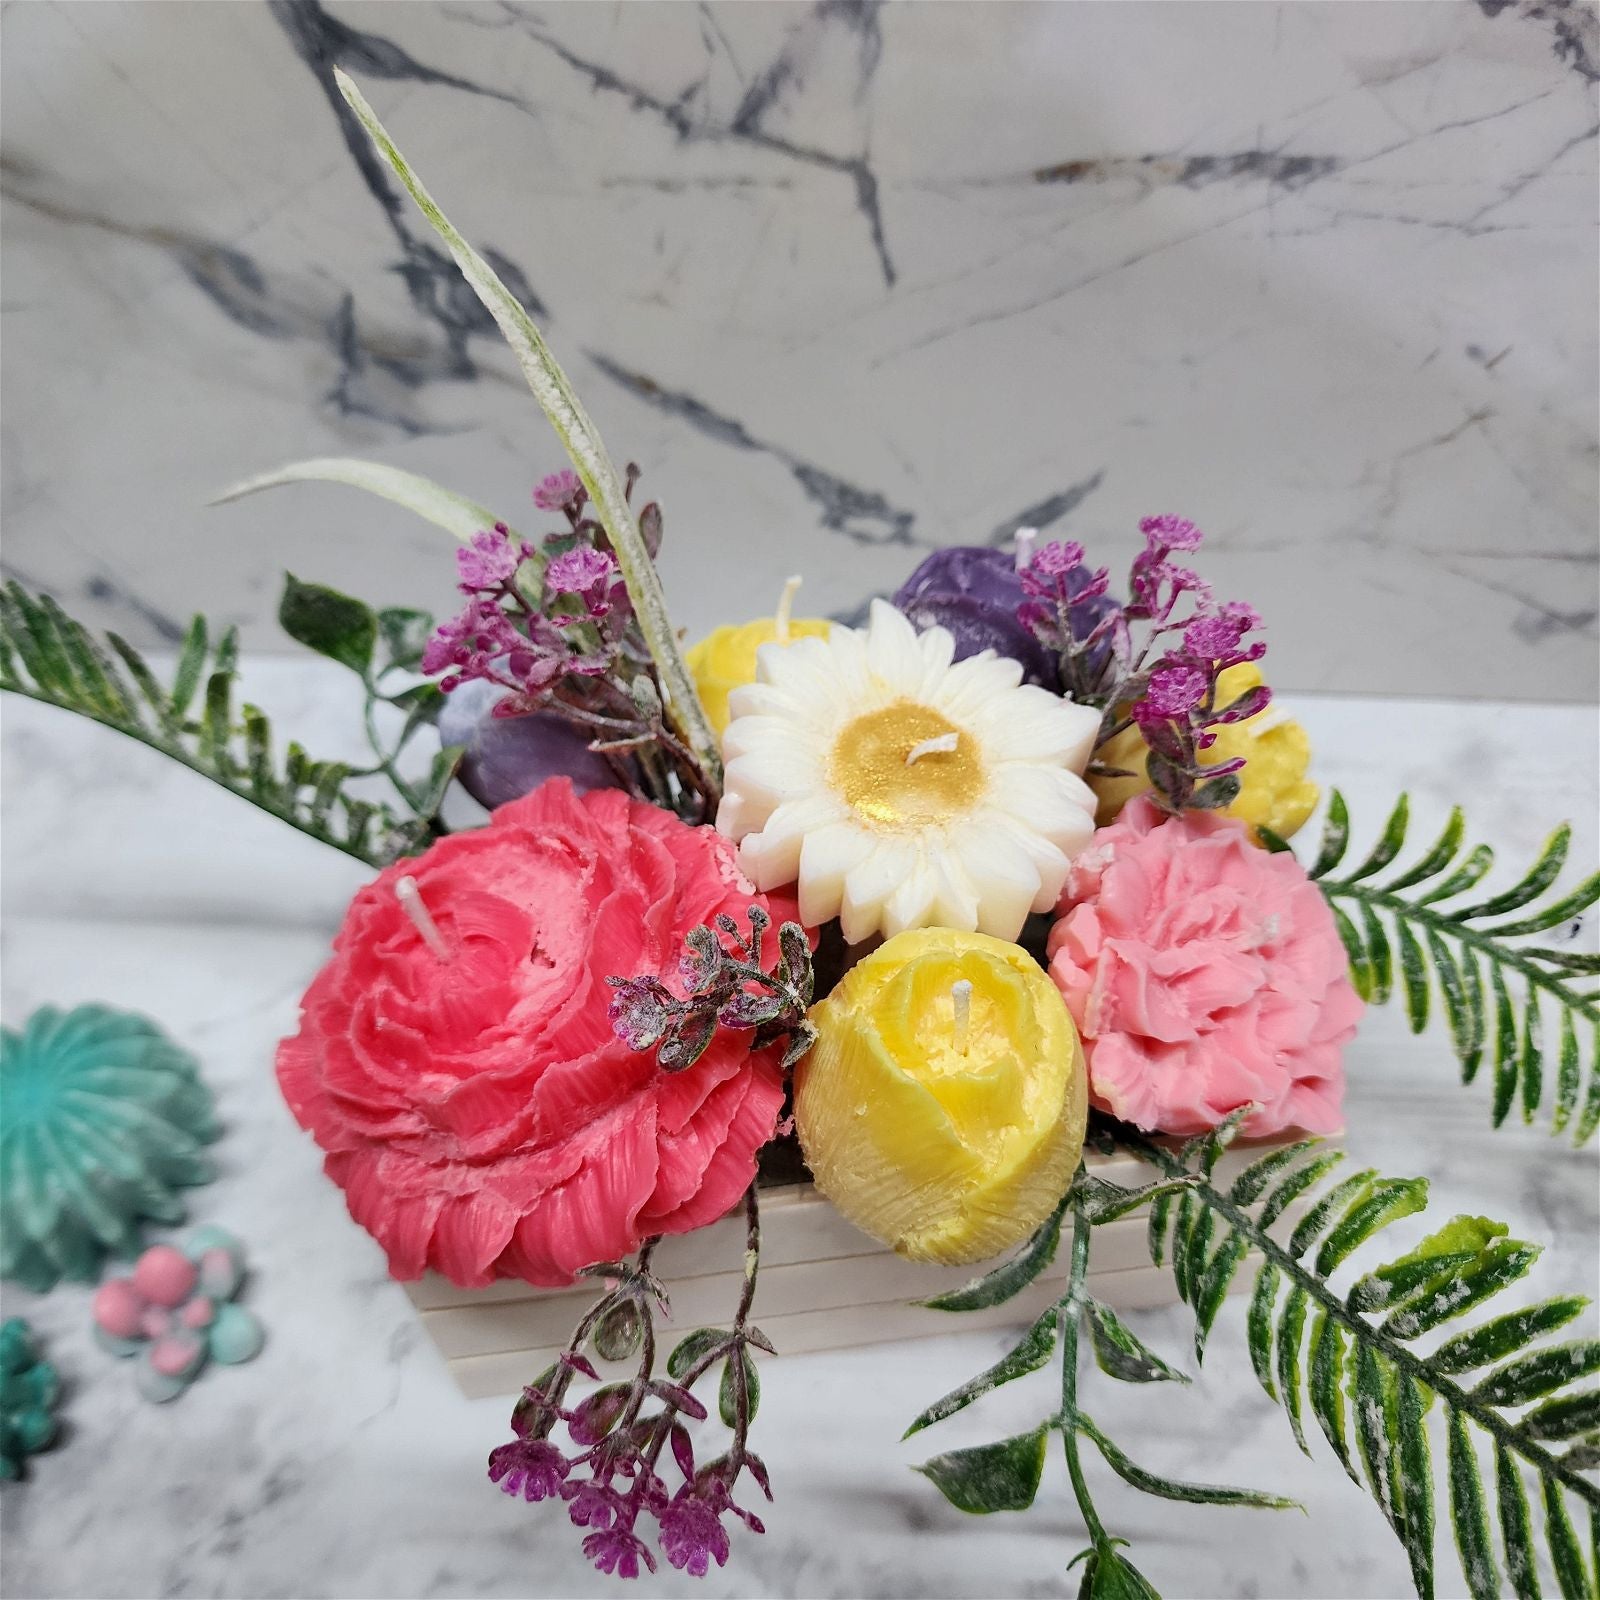 Bright Colors Flower Candles Arrangement | Premium Soy Wax | Handcrafted Floral Candle Centerpiece | Wedding | Home Decor - D SCENT 